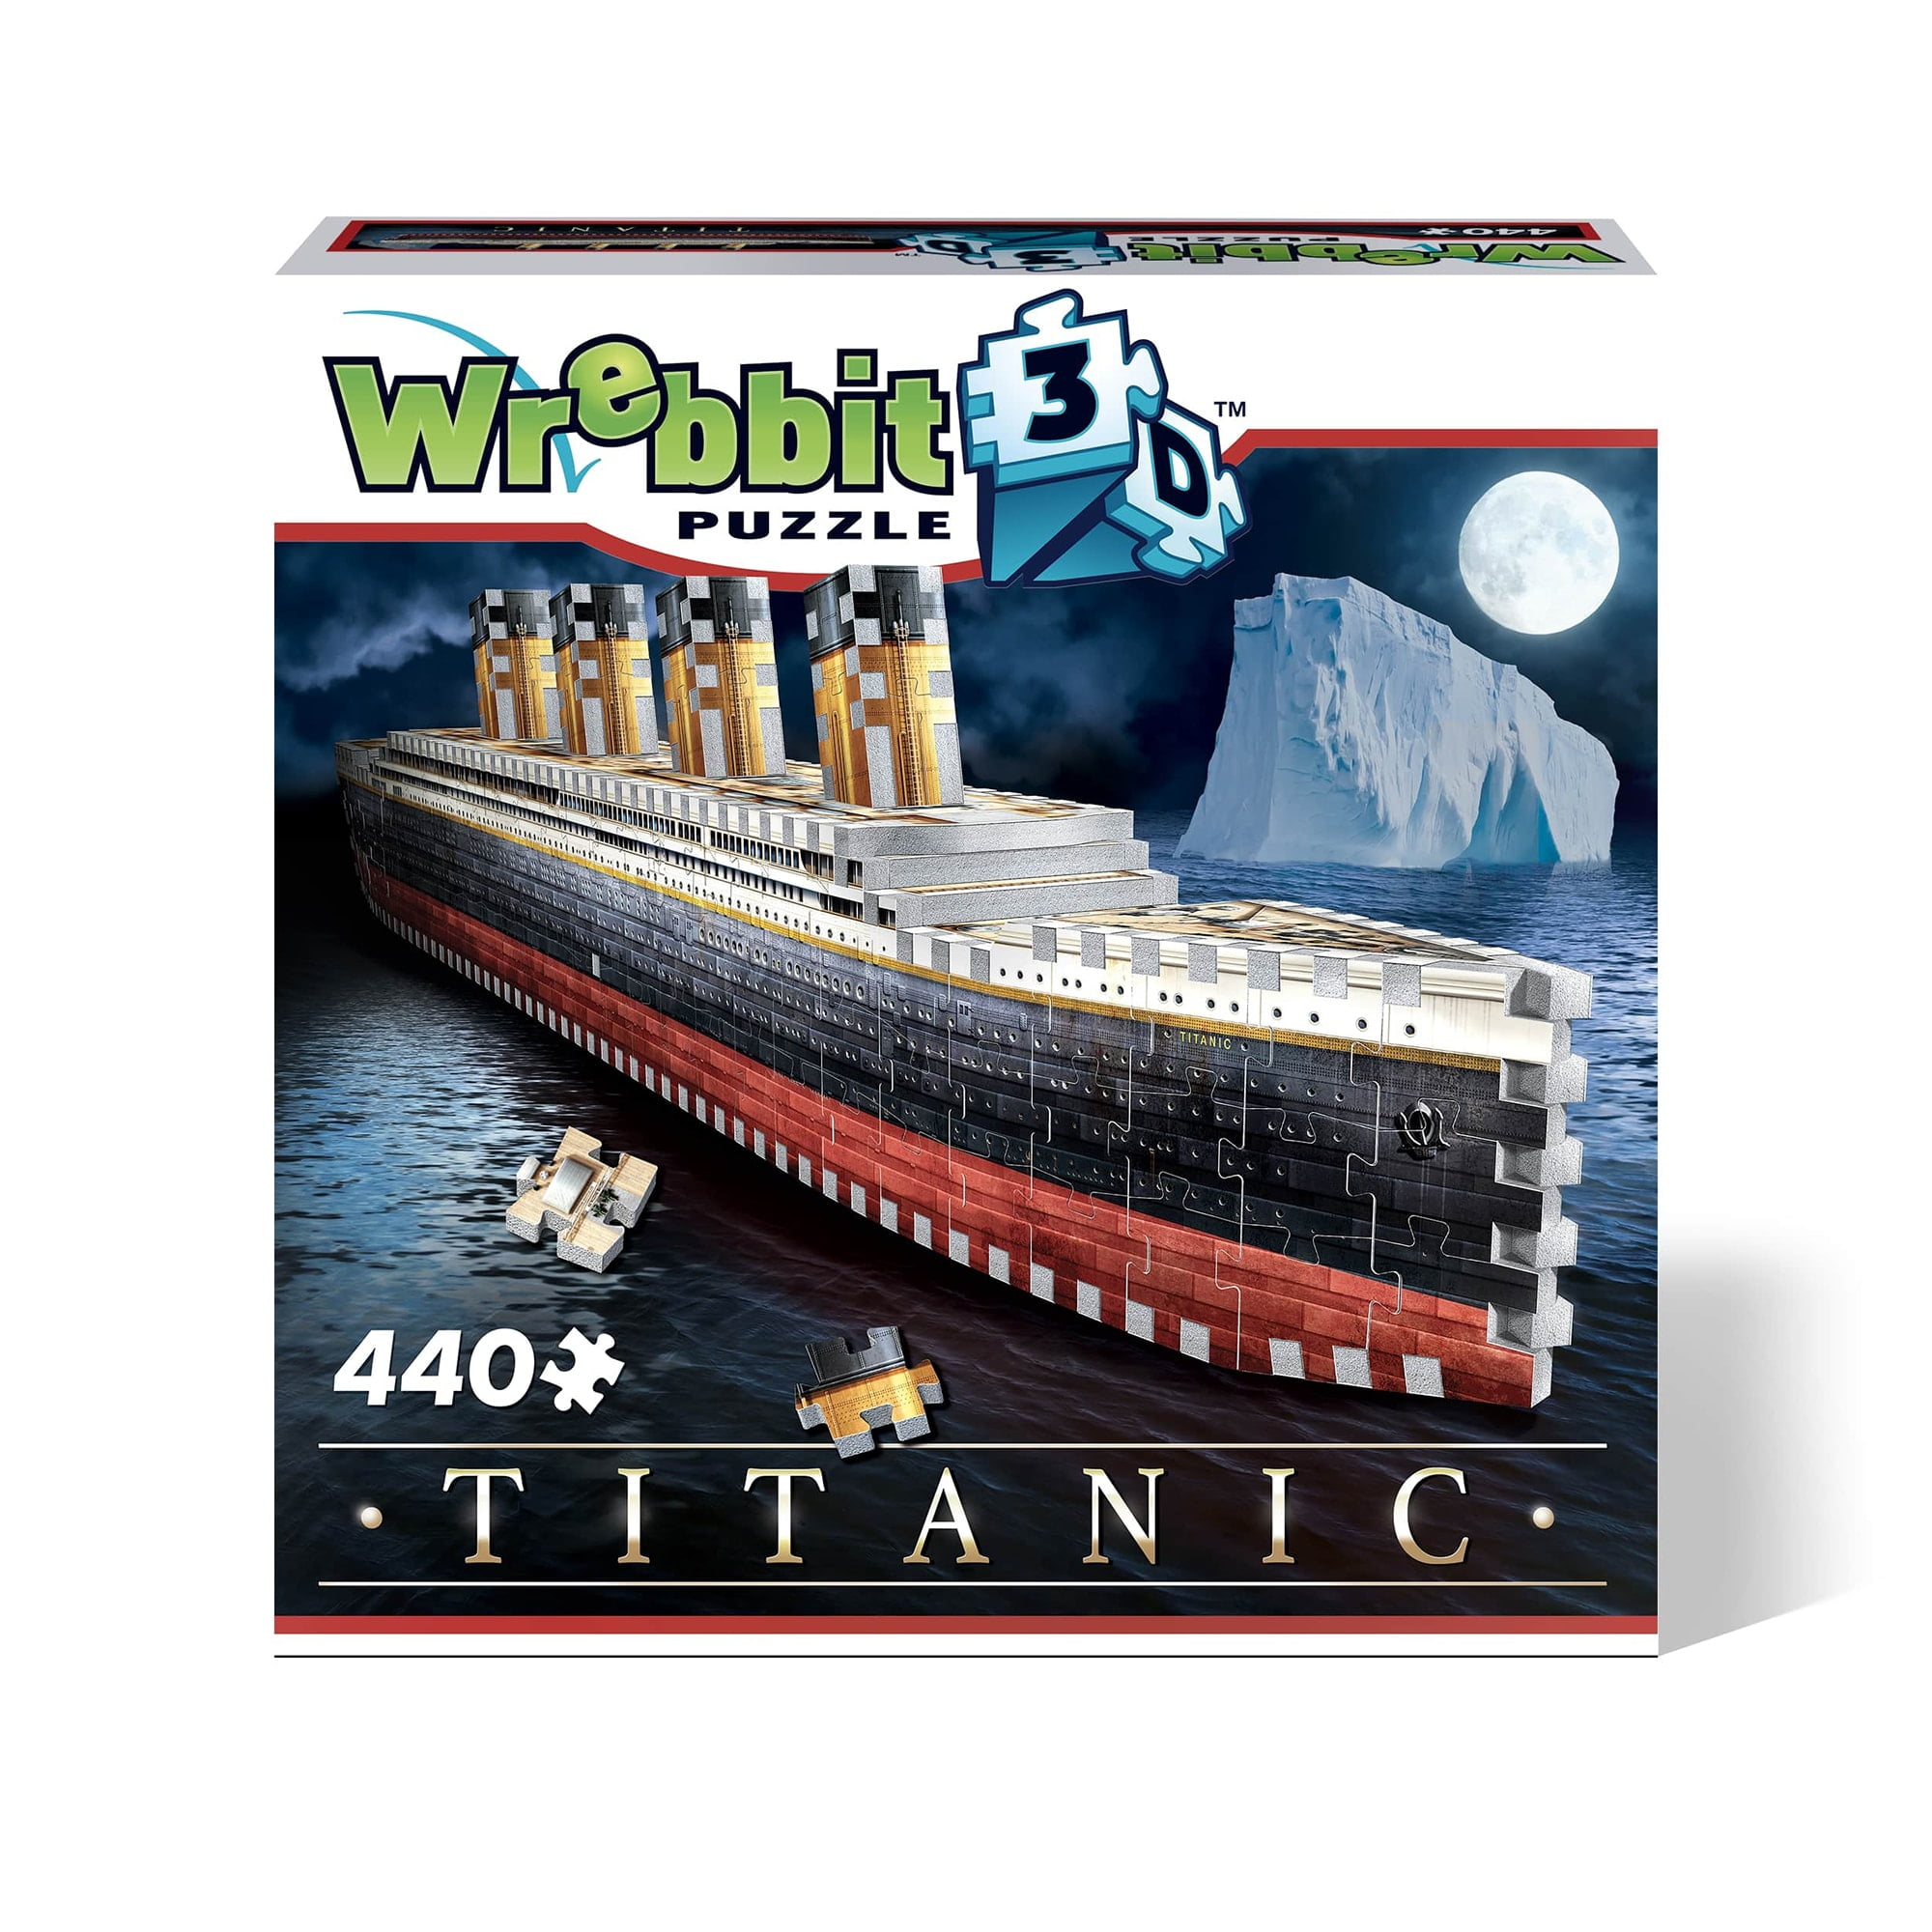 DAD Puzzle 3D Titanic - collectibles - by owner - sale - craigslist